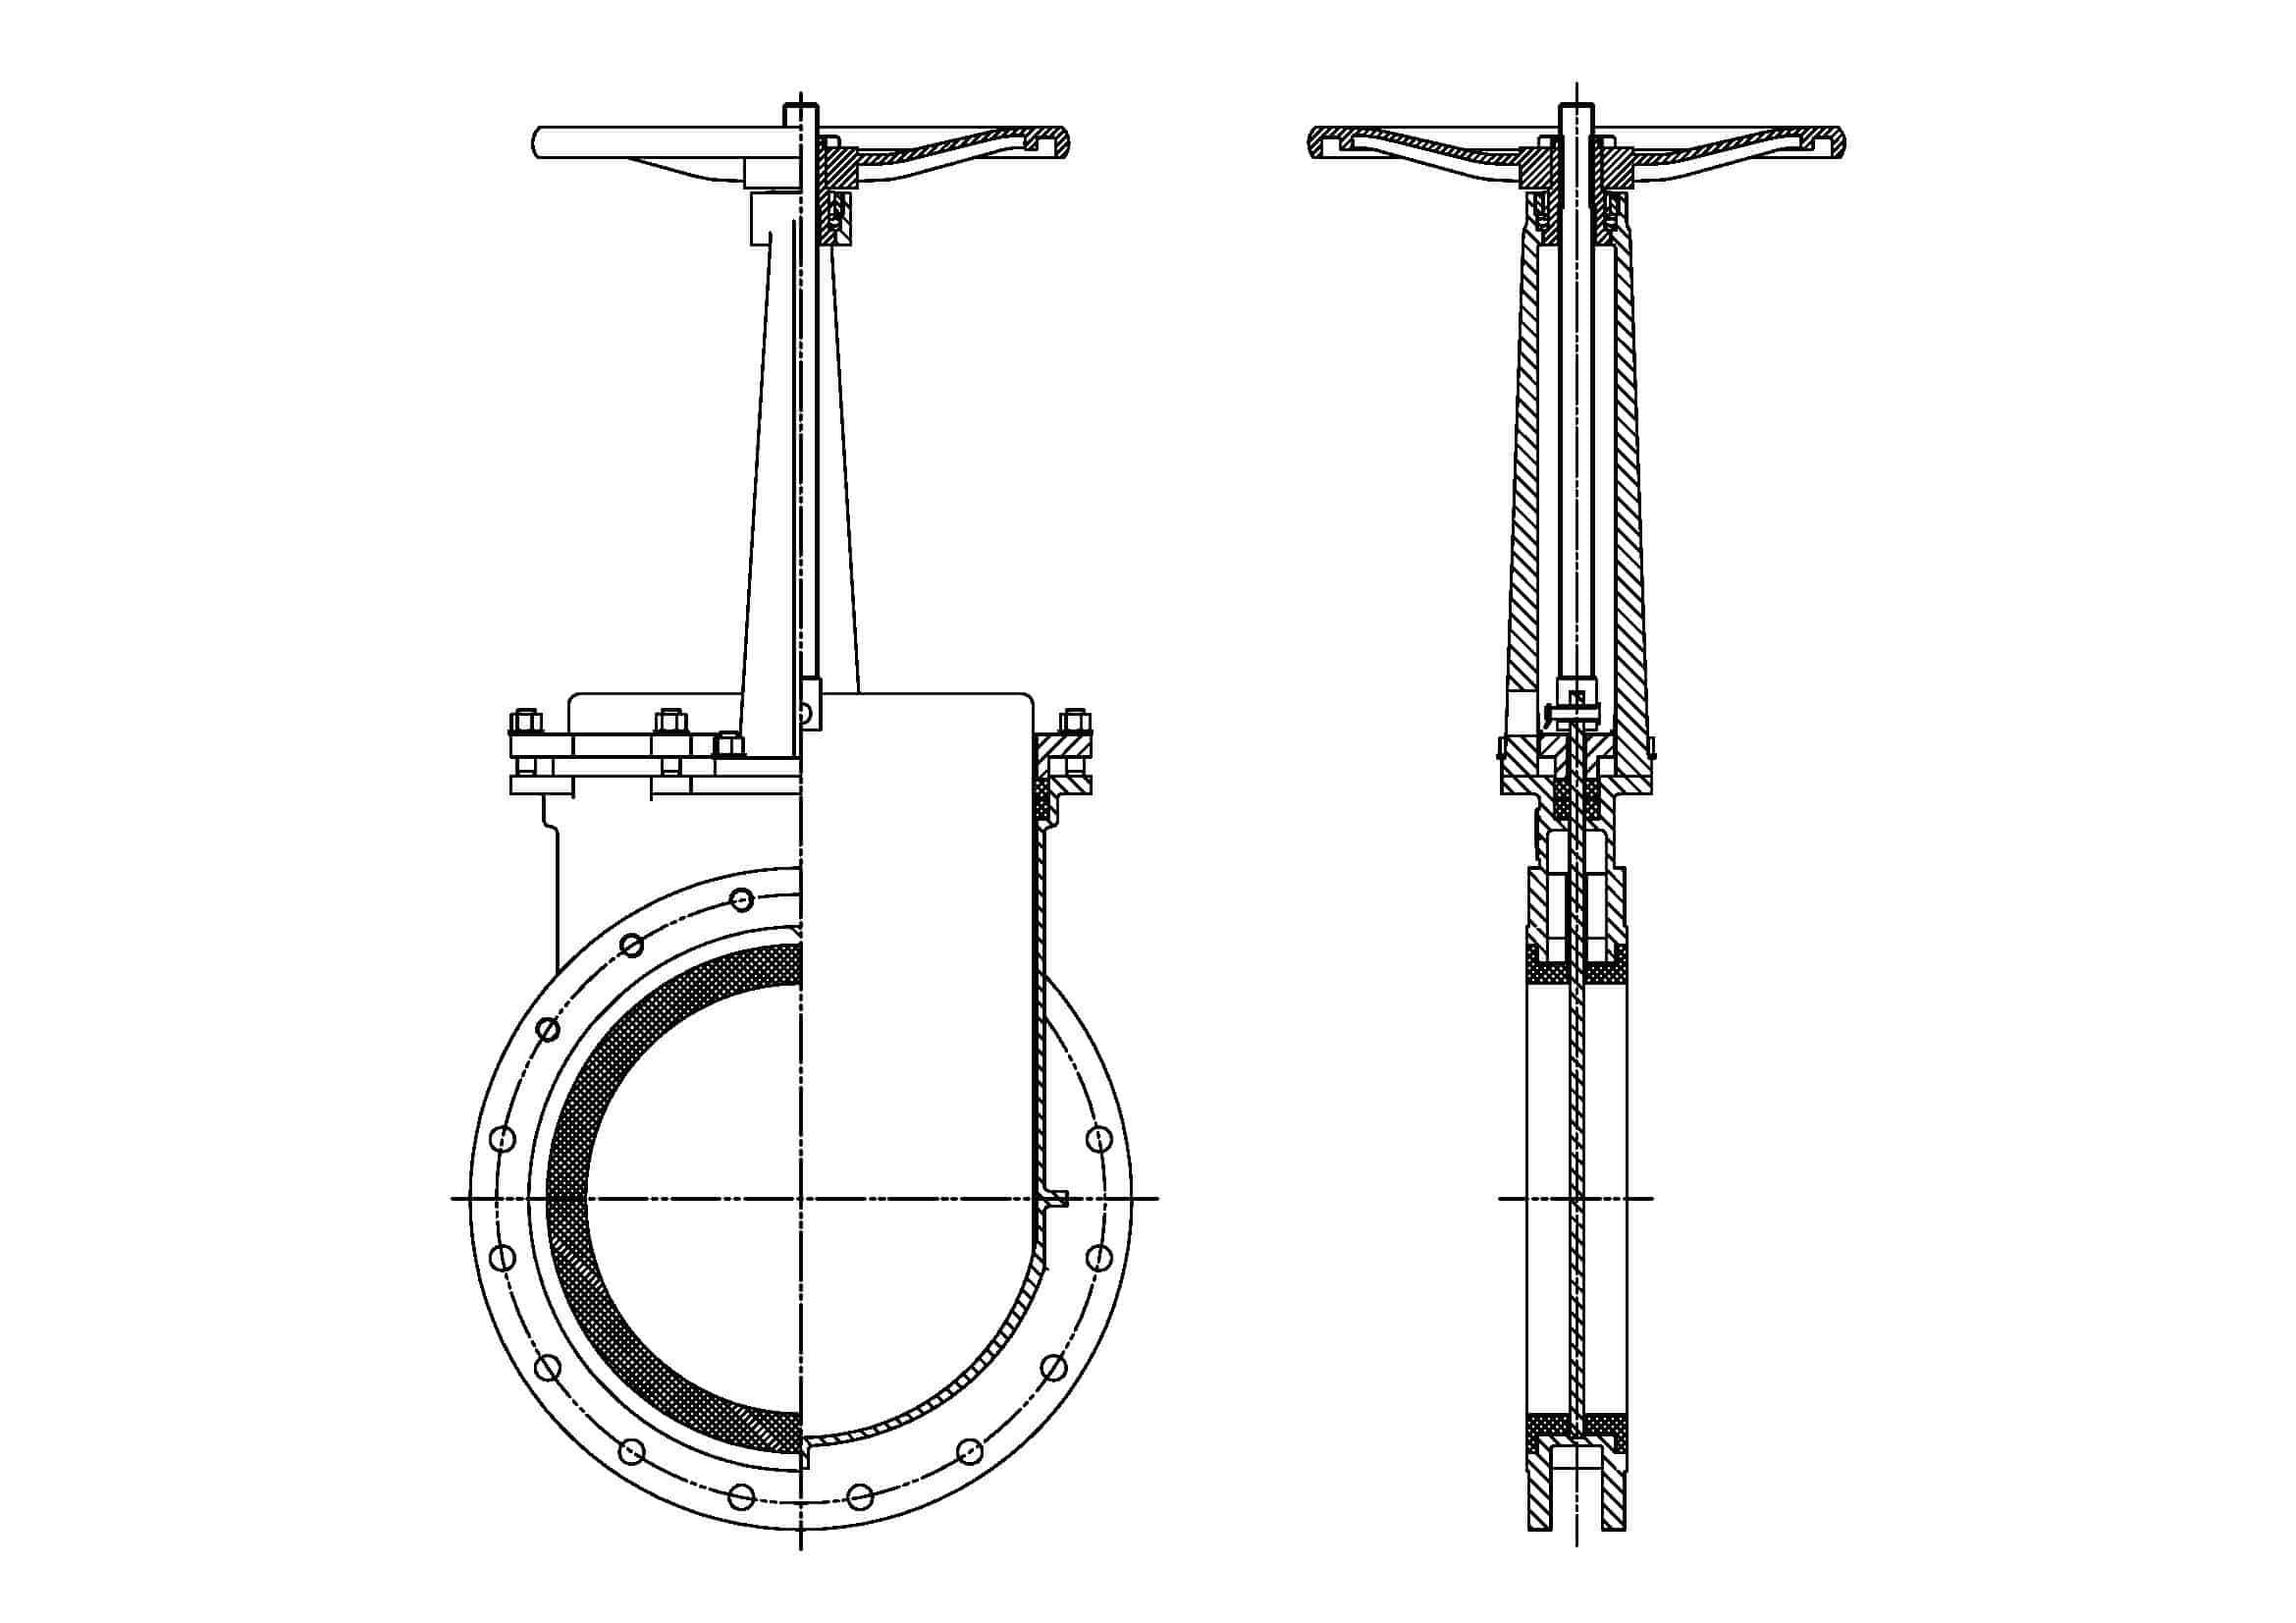 lug type knife gate valve